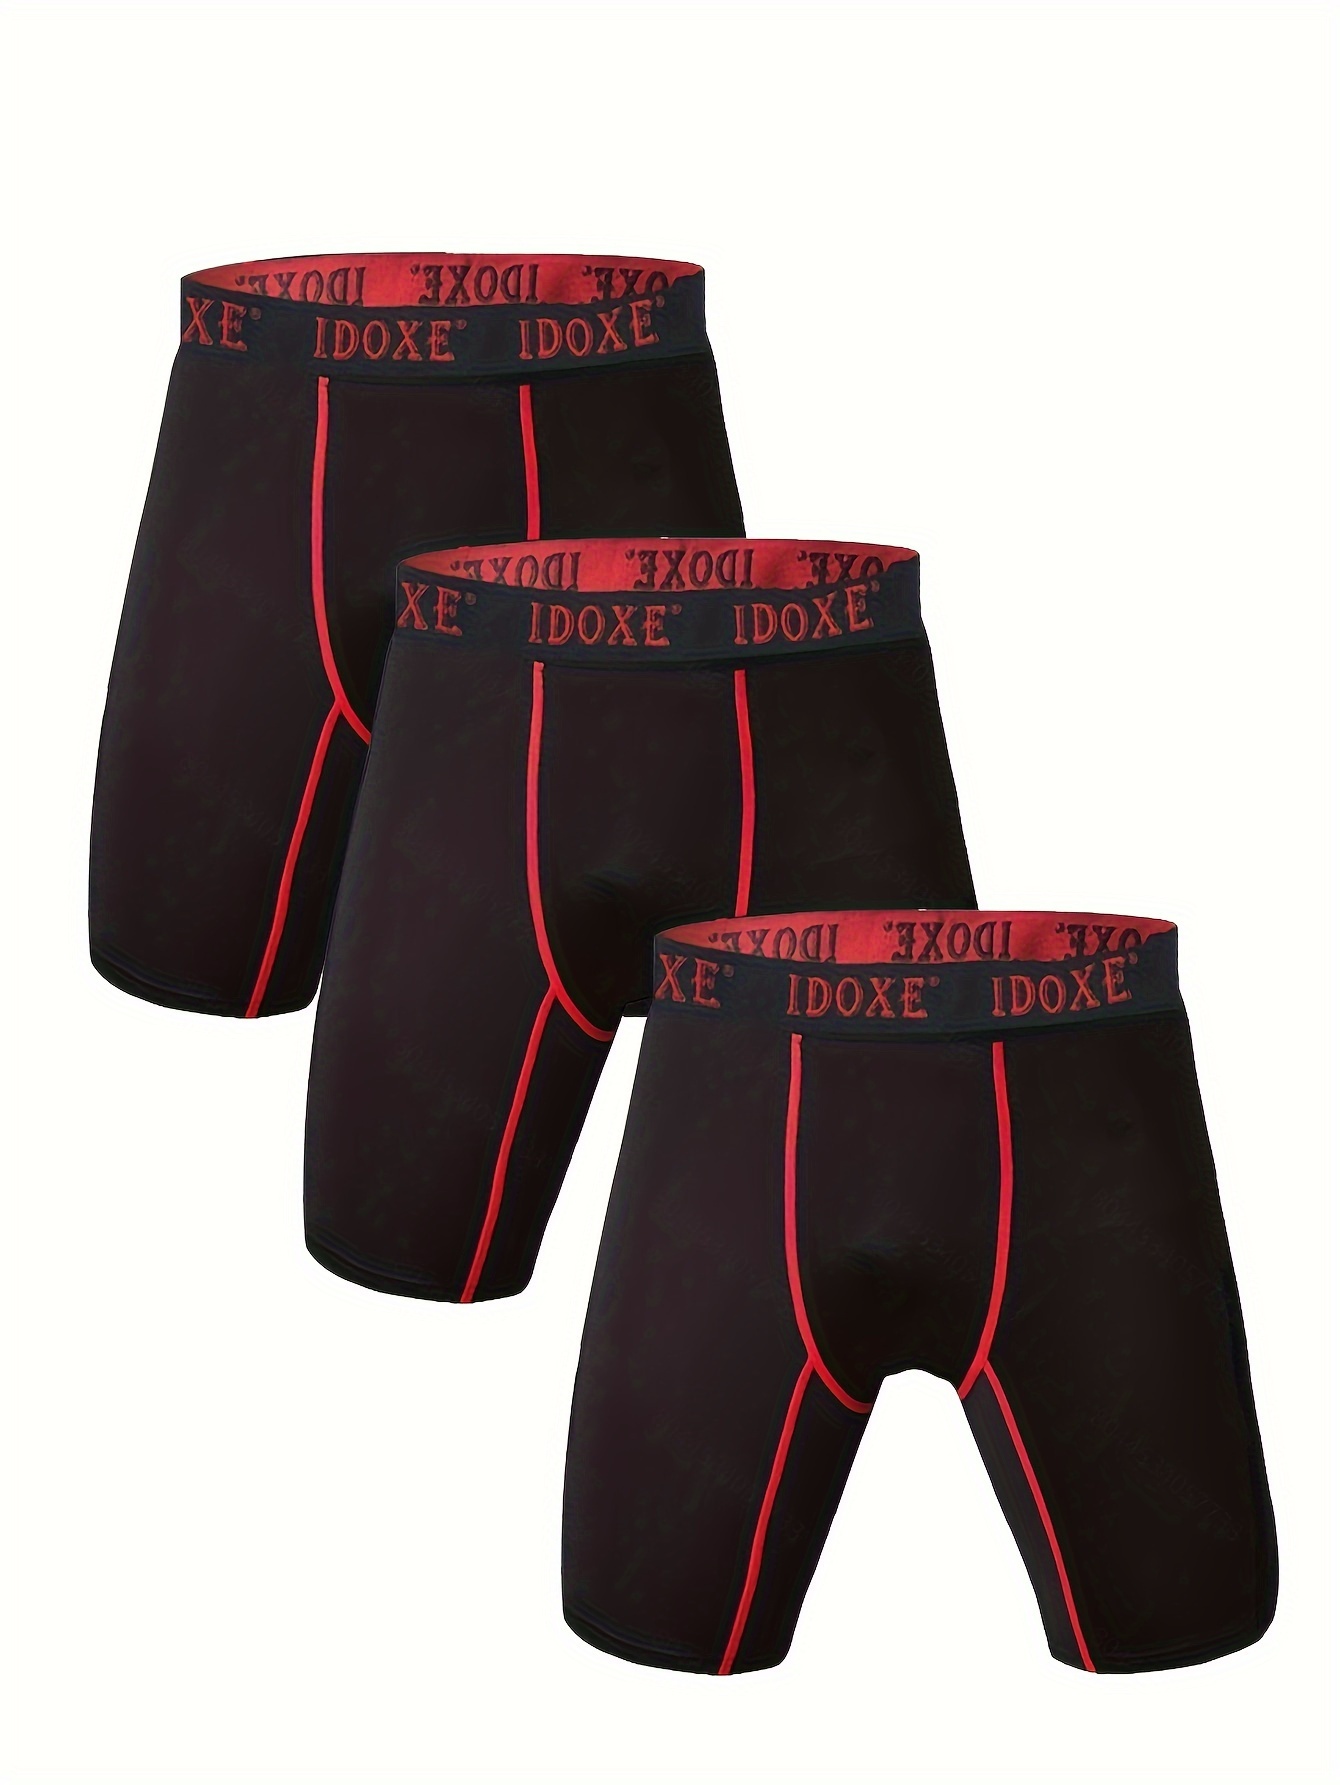 5pcs Men's Sports Running Quick-drying Boxer Briefs Underwear, Long Leg  Performance Compression Men's Underwear